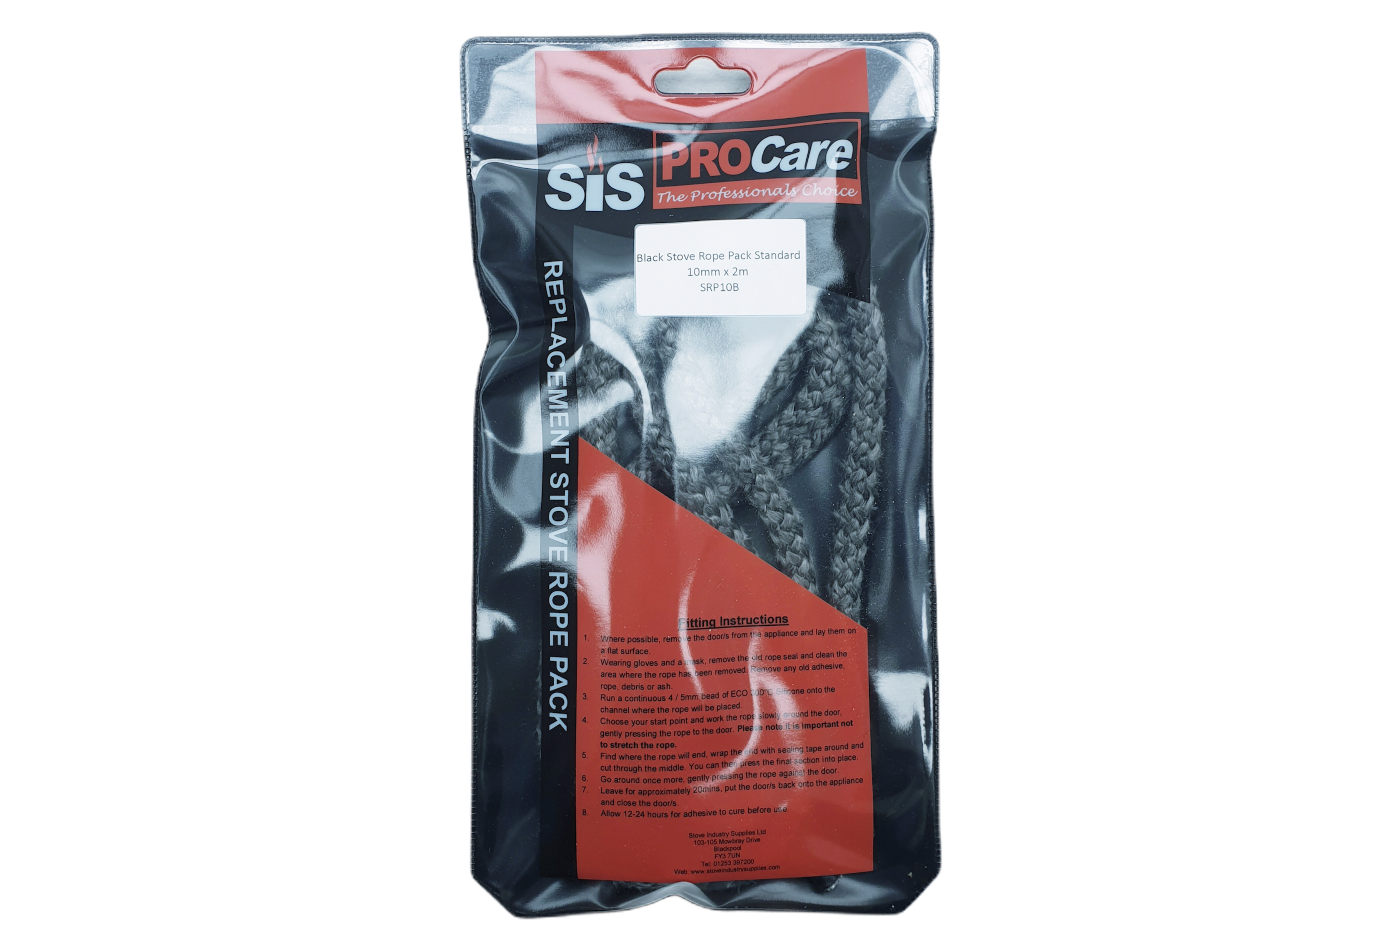 SiS Procare Black 10 milimetre x 2 metre Standard Stove Rope Pack - product code SRP10B